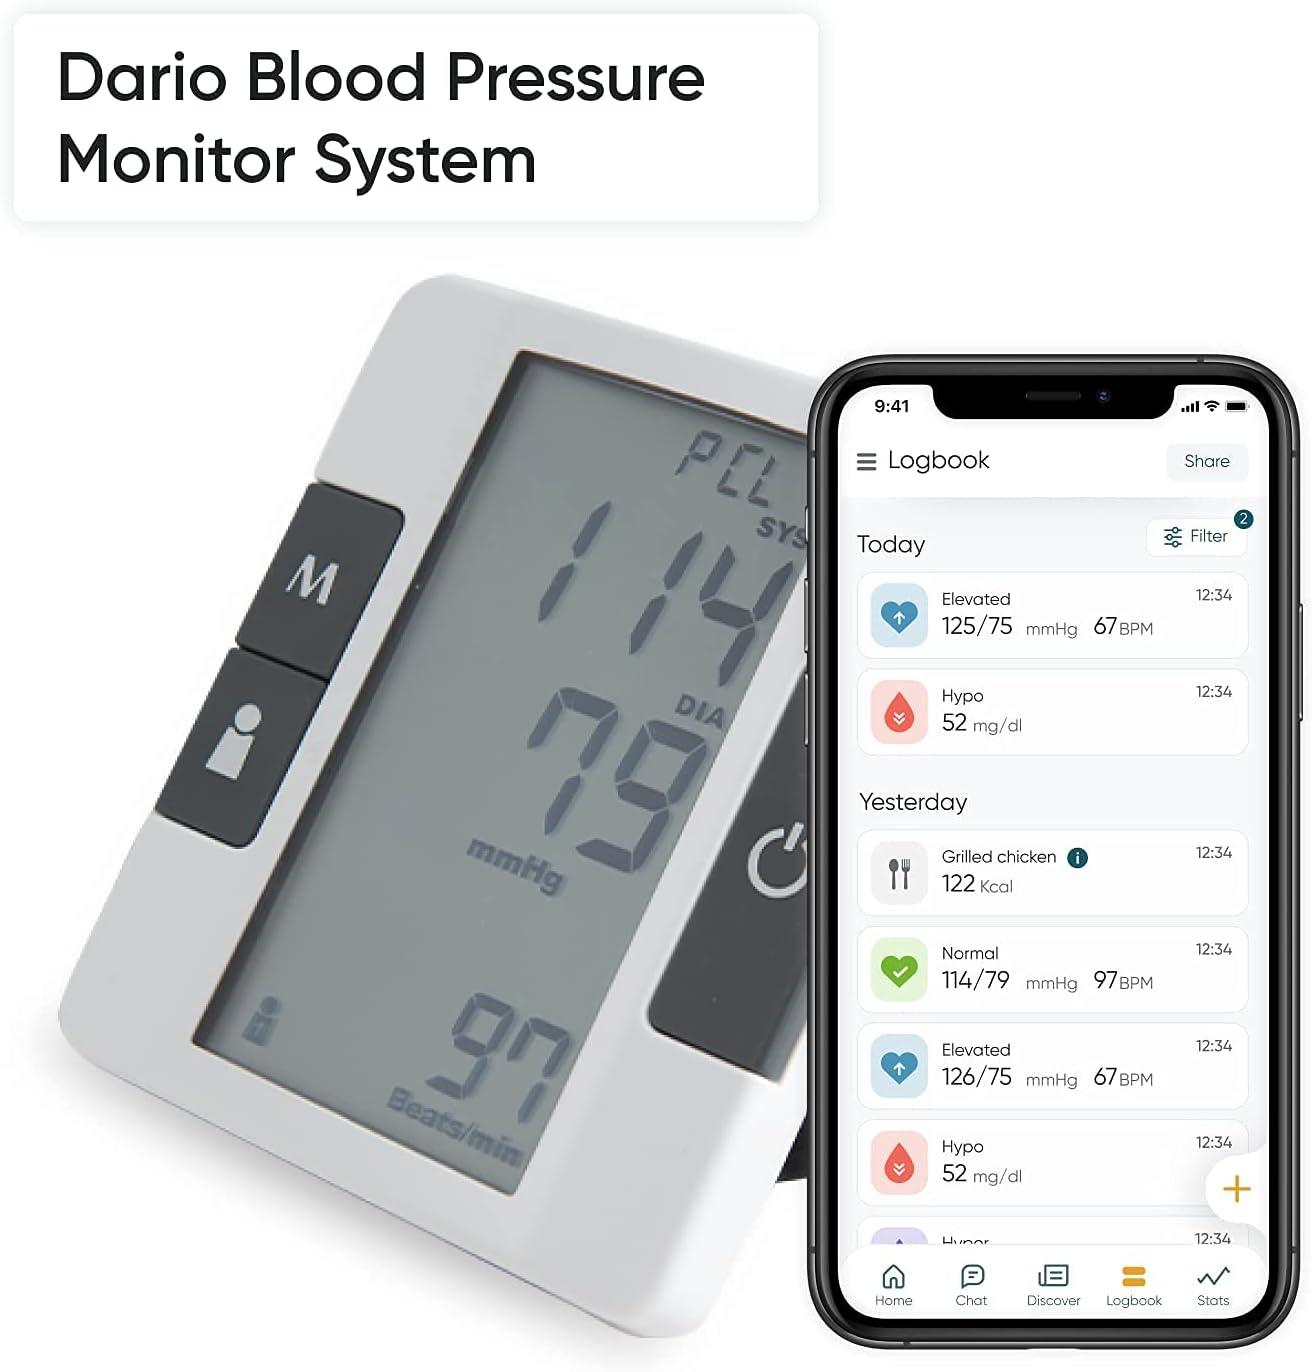 DARIO TD-3128B Blood Pressure Monitoring System Instruction Manual